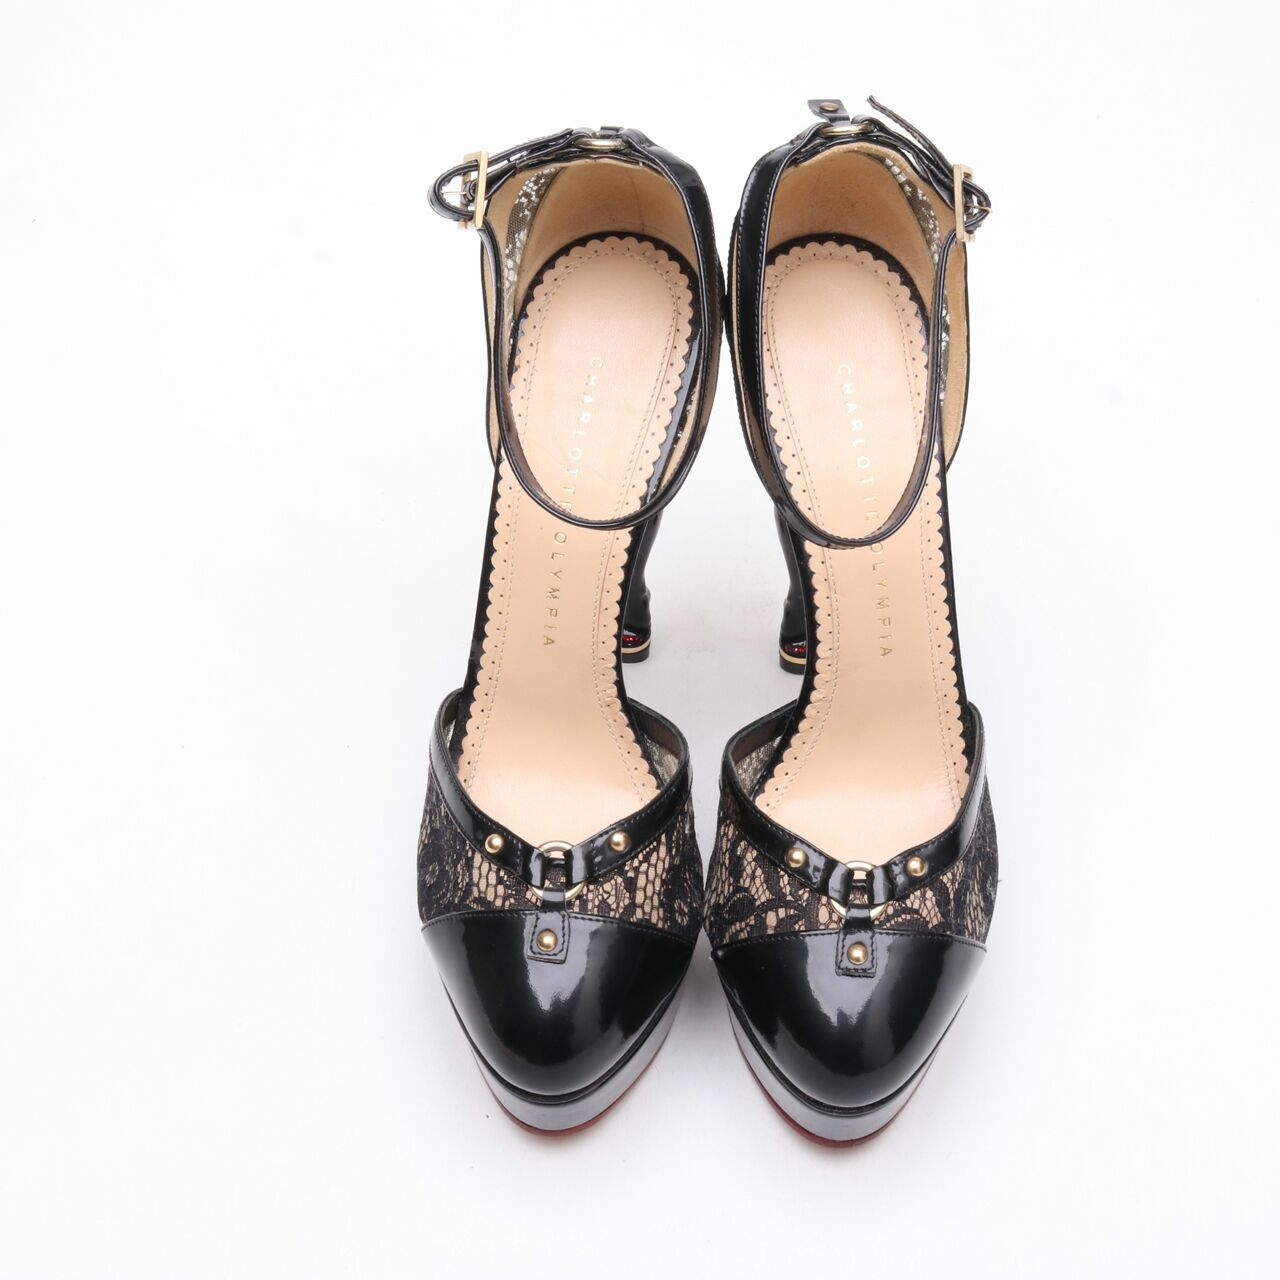 Charlotte Olympia Brokat Black Patent Heels